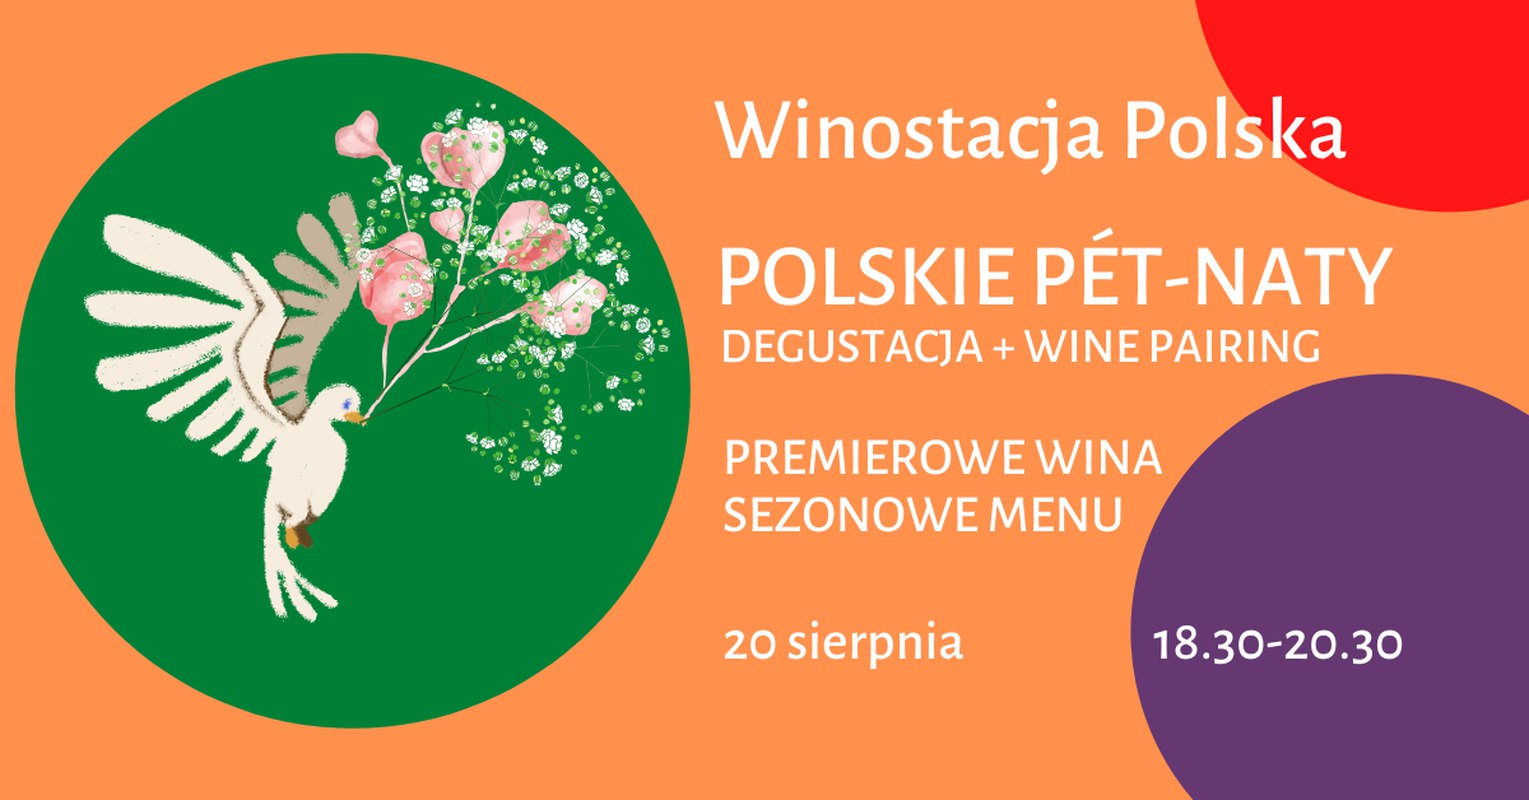 Polskie pét-naty. Degustacja i wine pairing